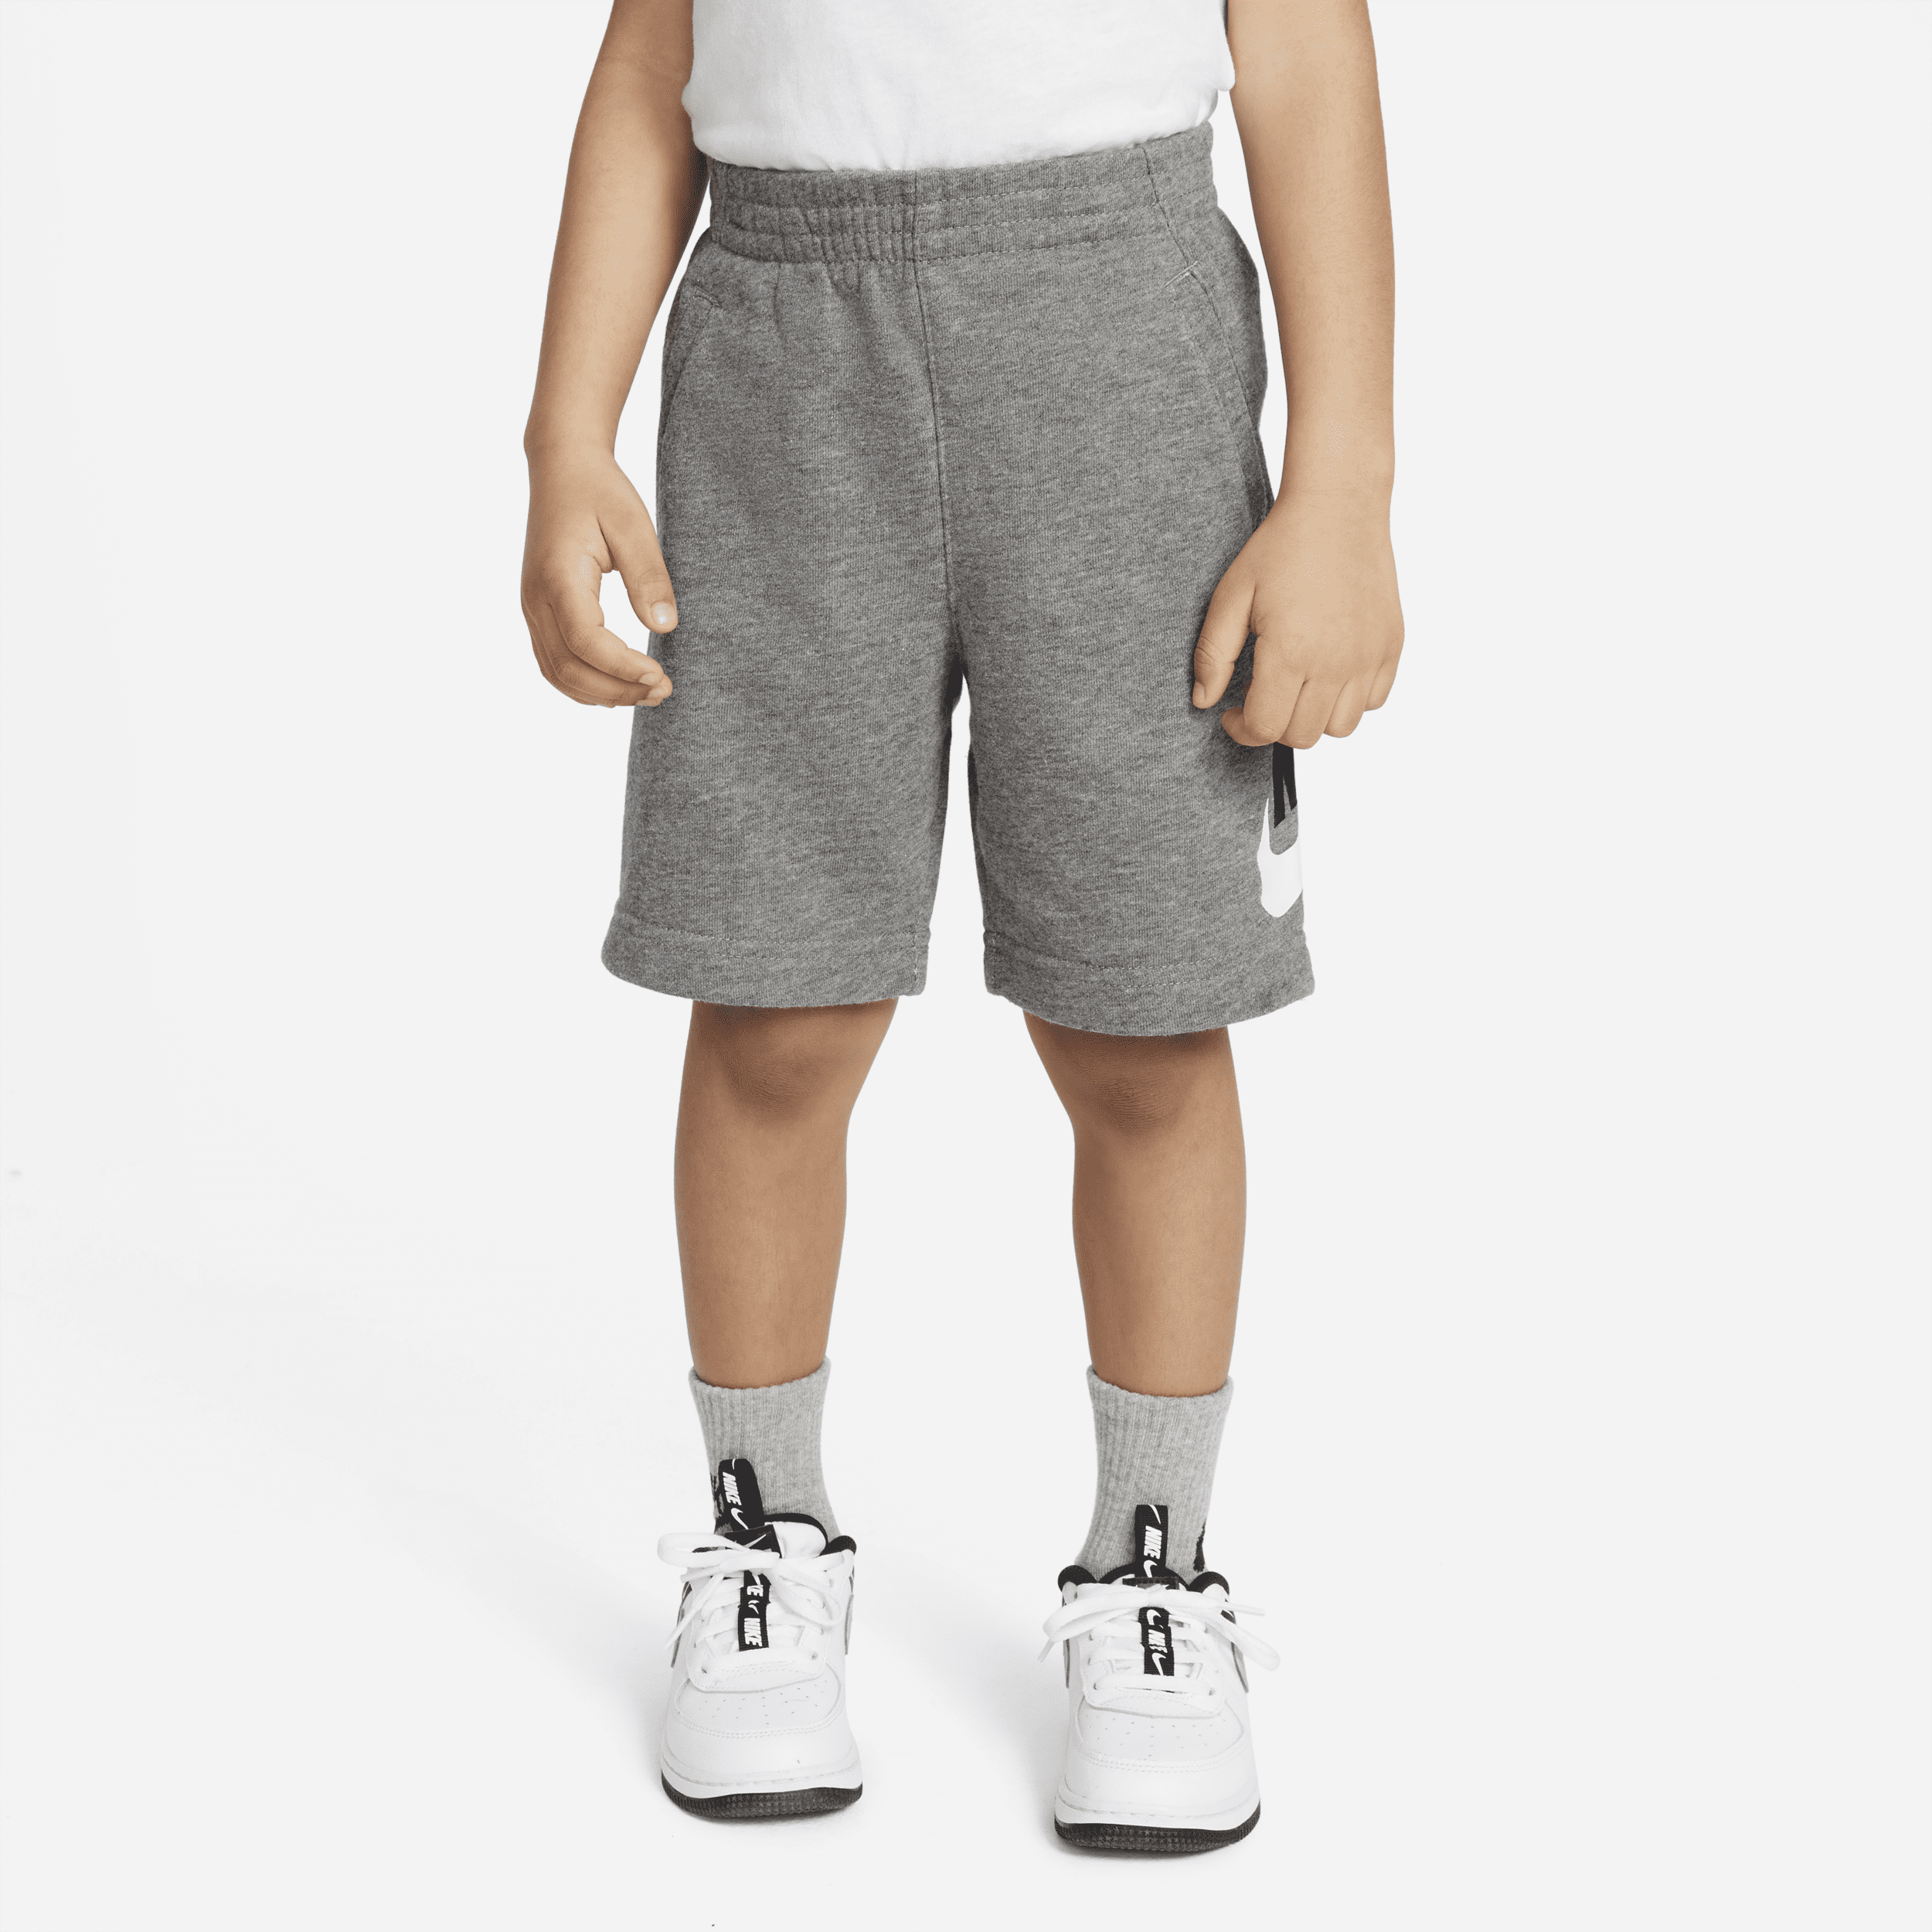 Shorts Nike Sportswear - Bimbi piccoli - Grigio